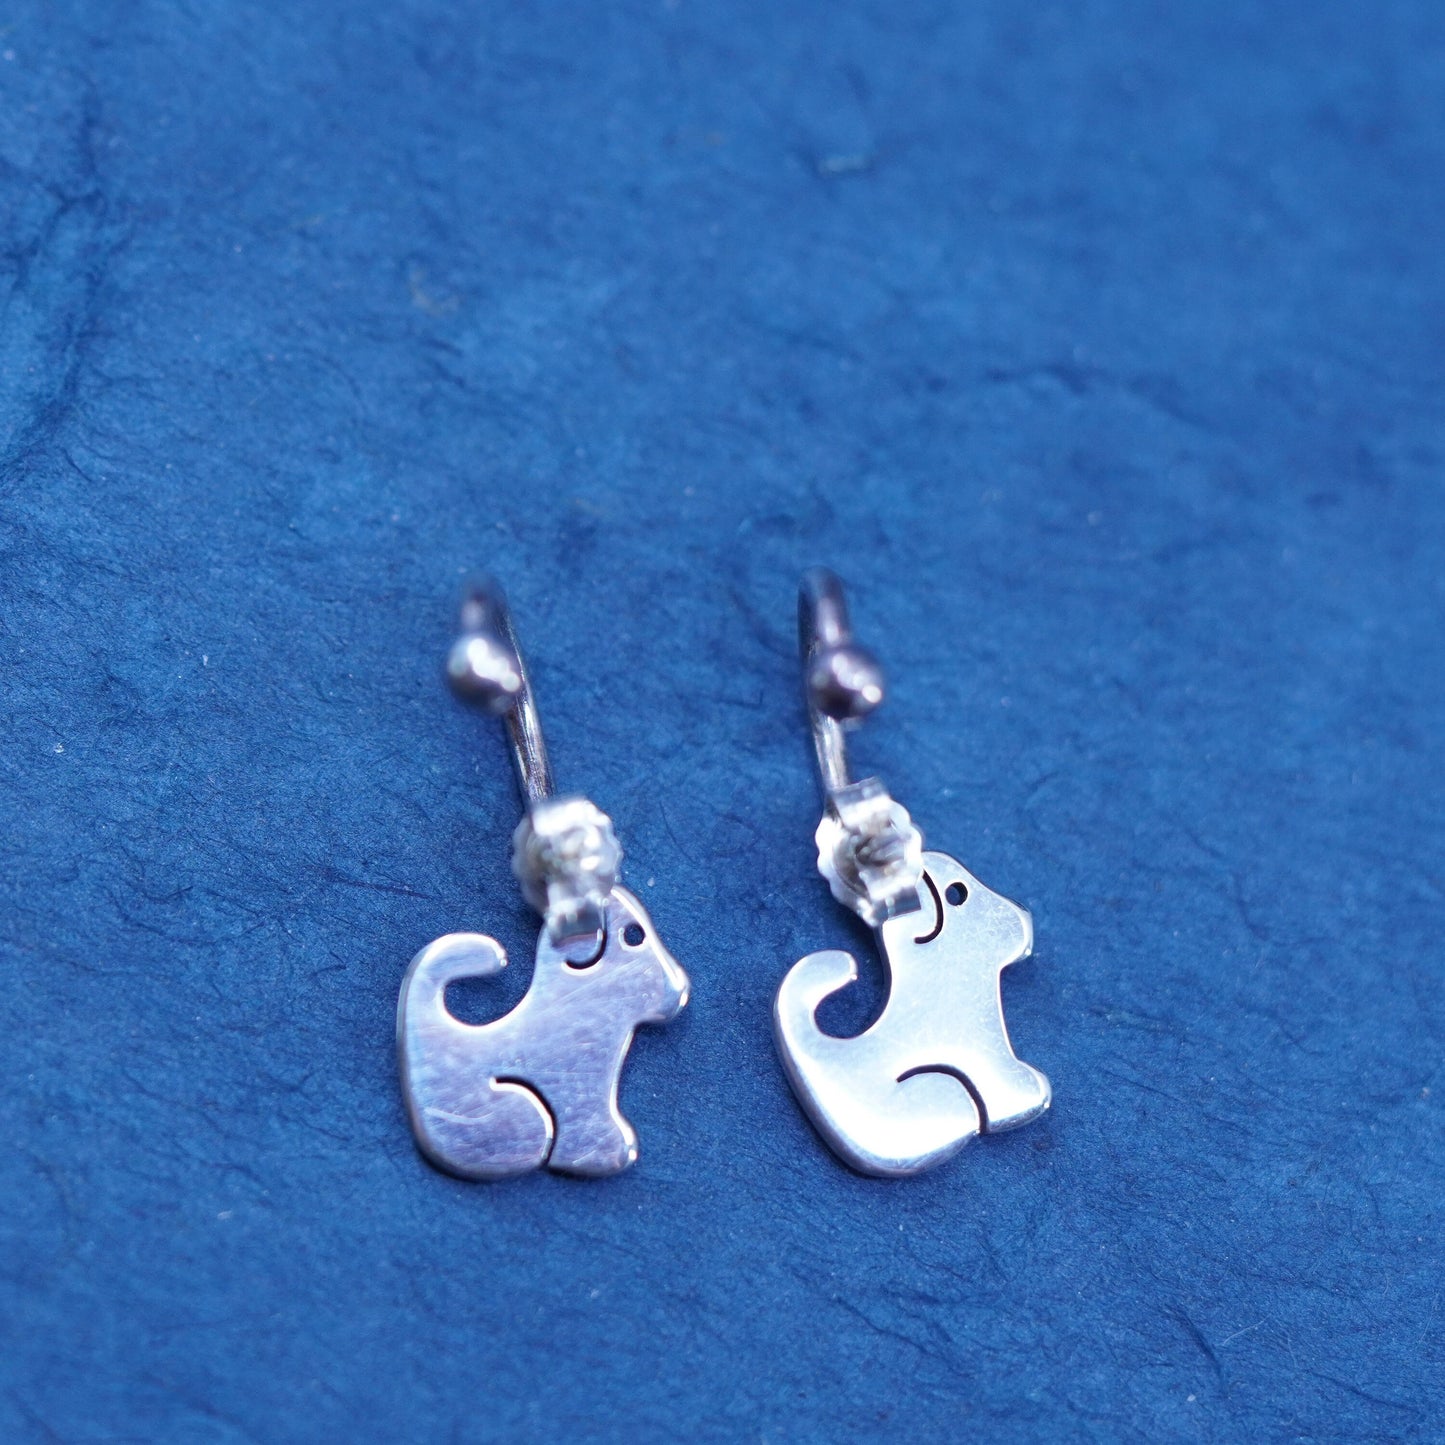 0.5”, Sterling silver handmade earrings, 925 hoops w/ dog puppy charms, huggie